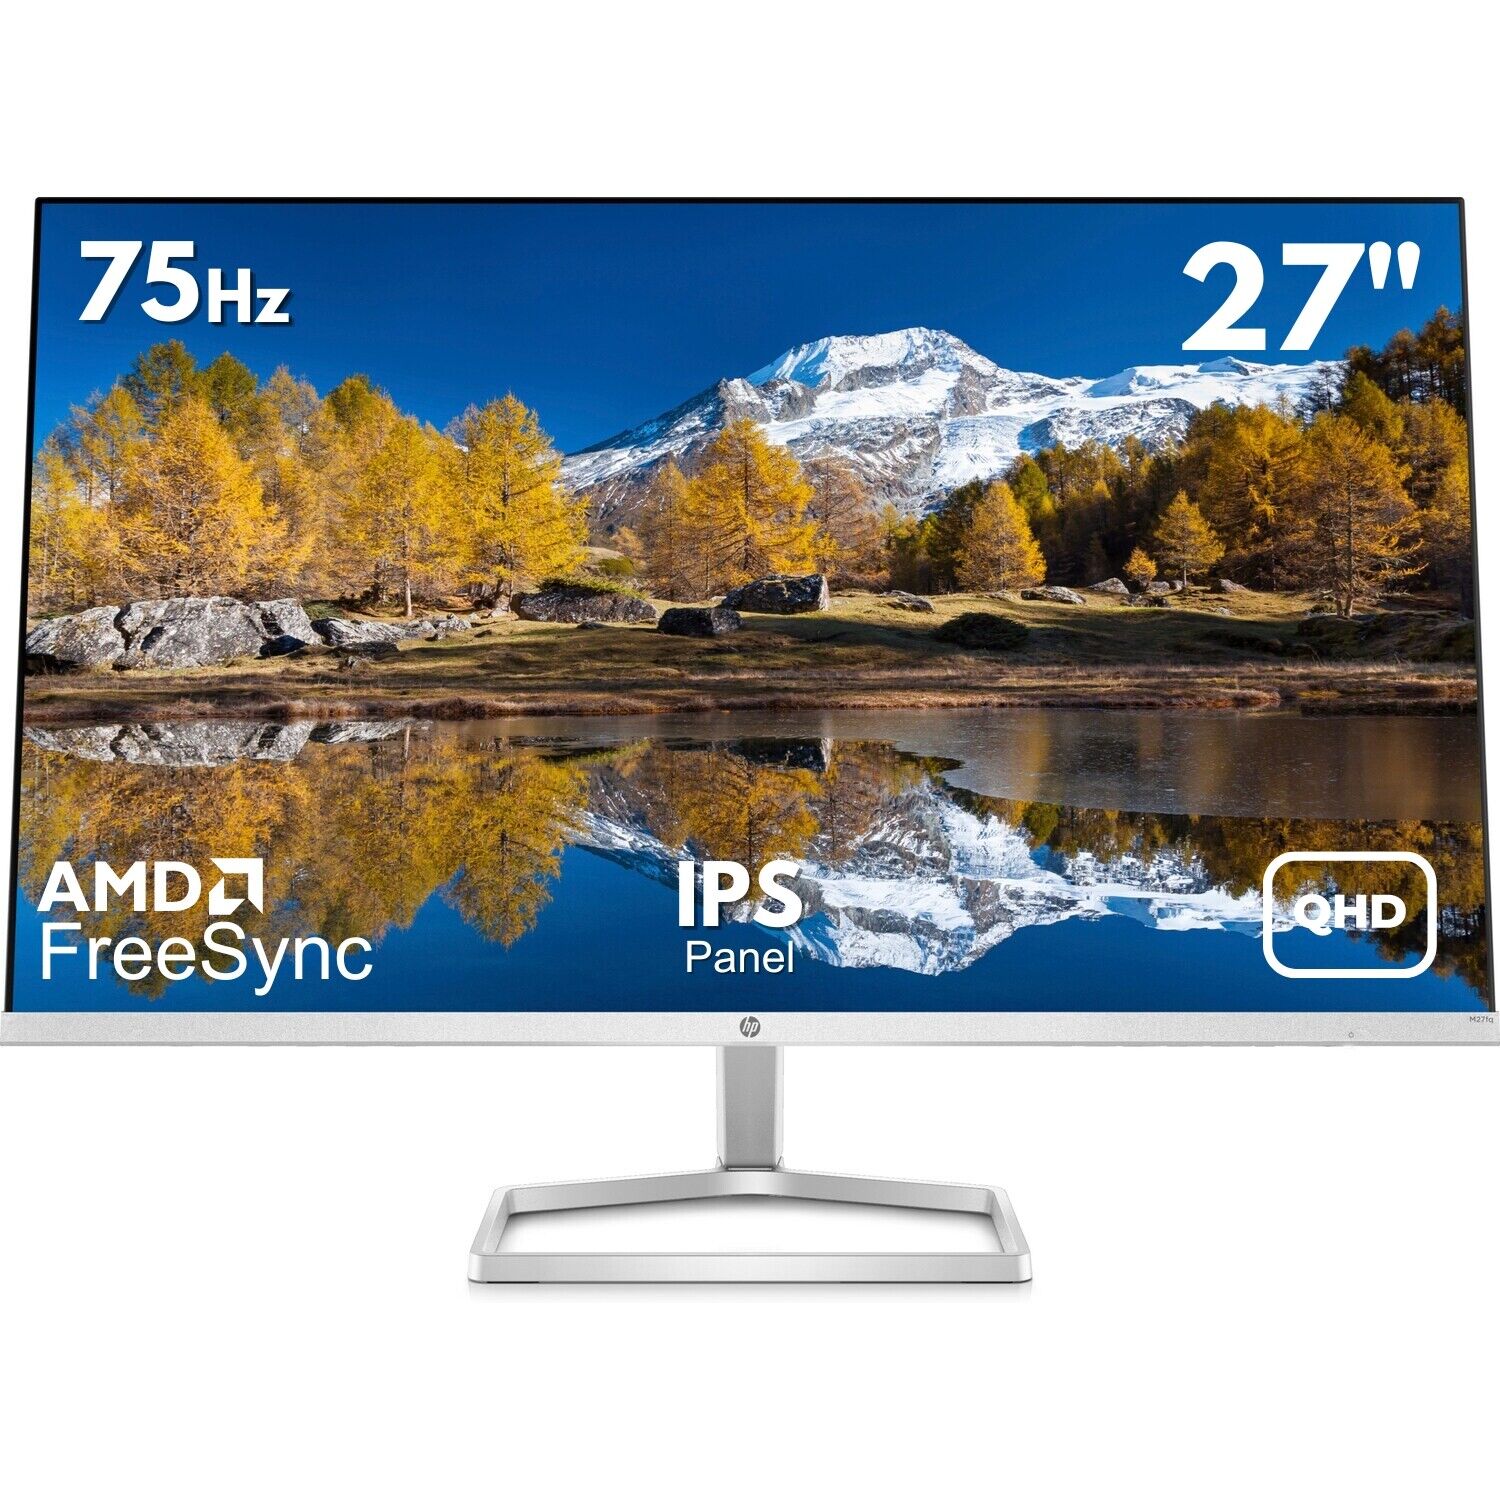 HP M27fq QHD Monitor - Computer 27-inch IPS Display (1440p) Silver - 2H4B5AA